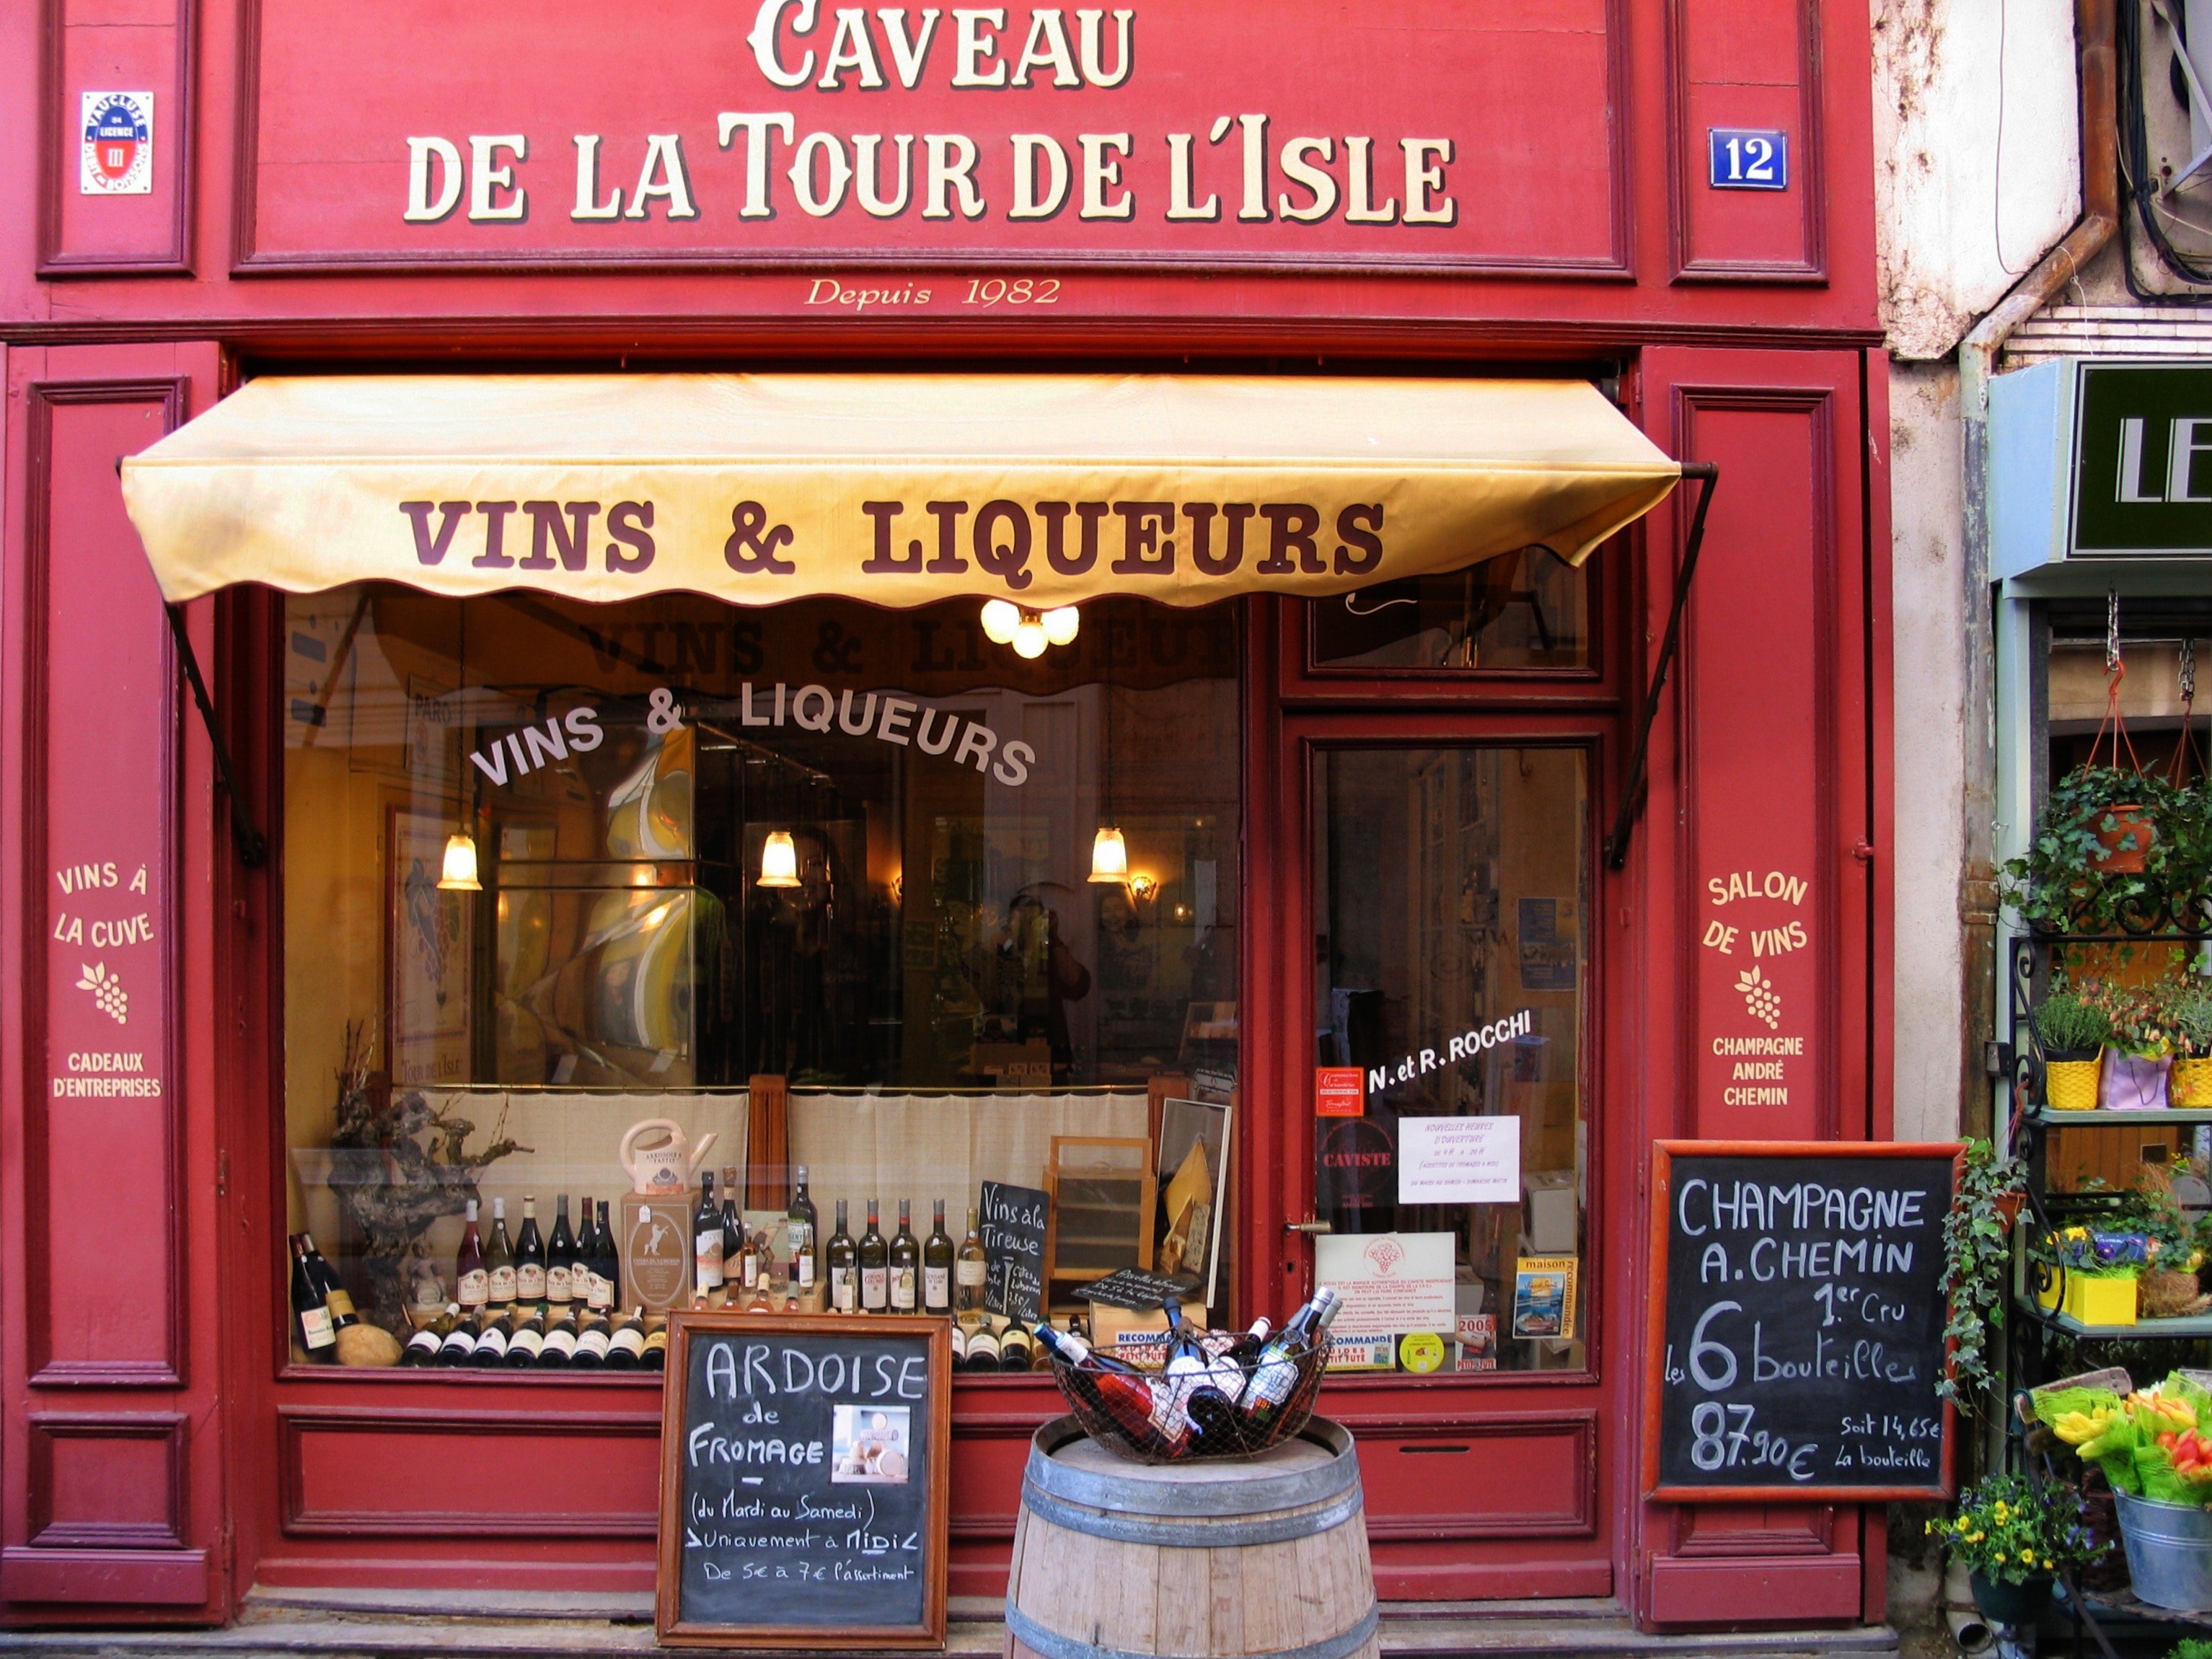 Vins & liqueurs store during daytime photo